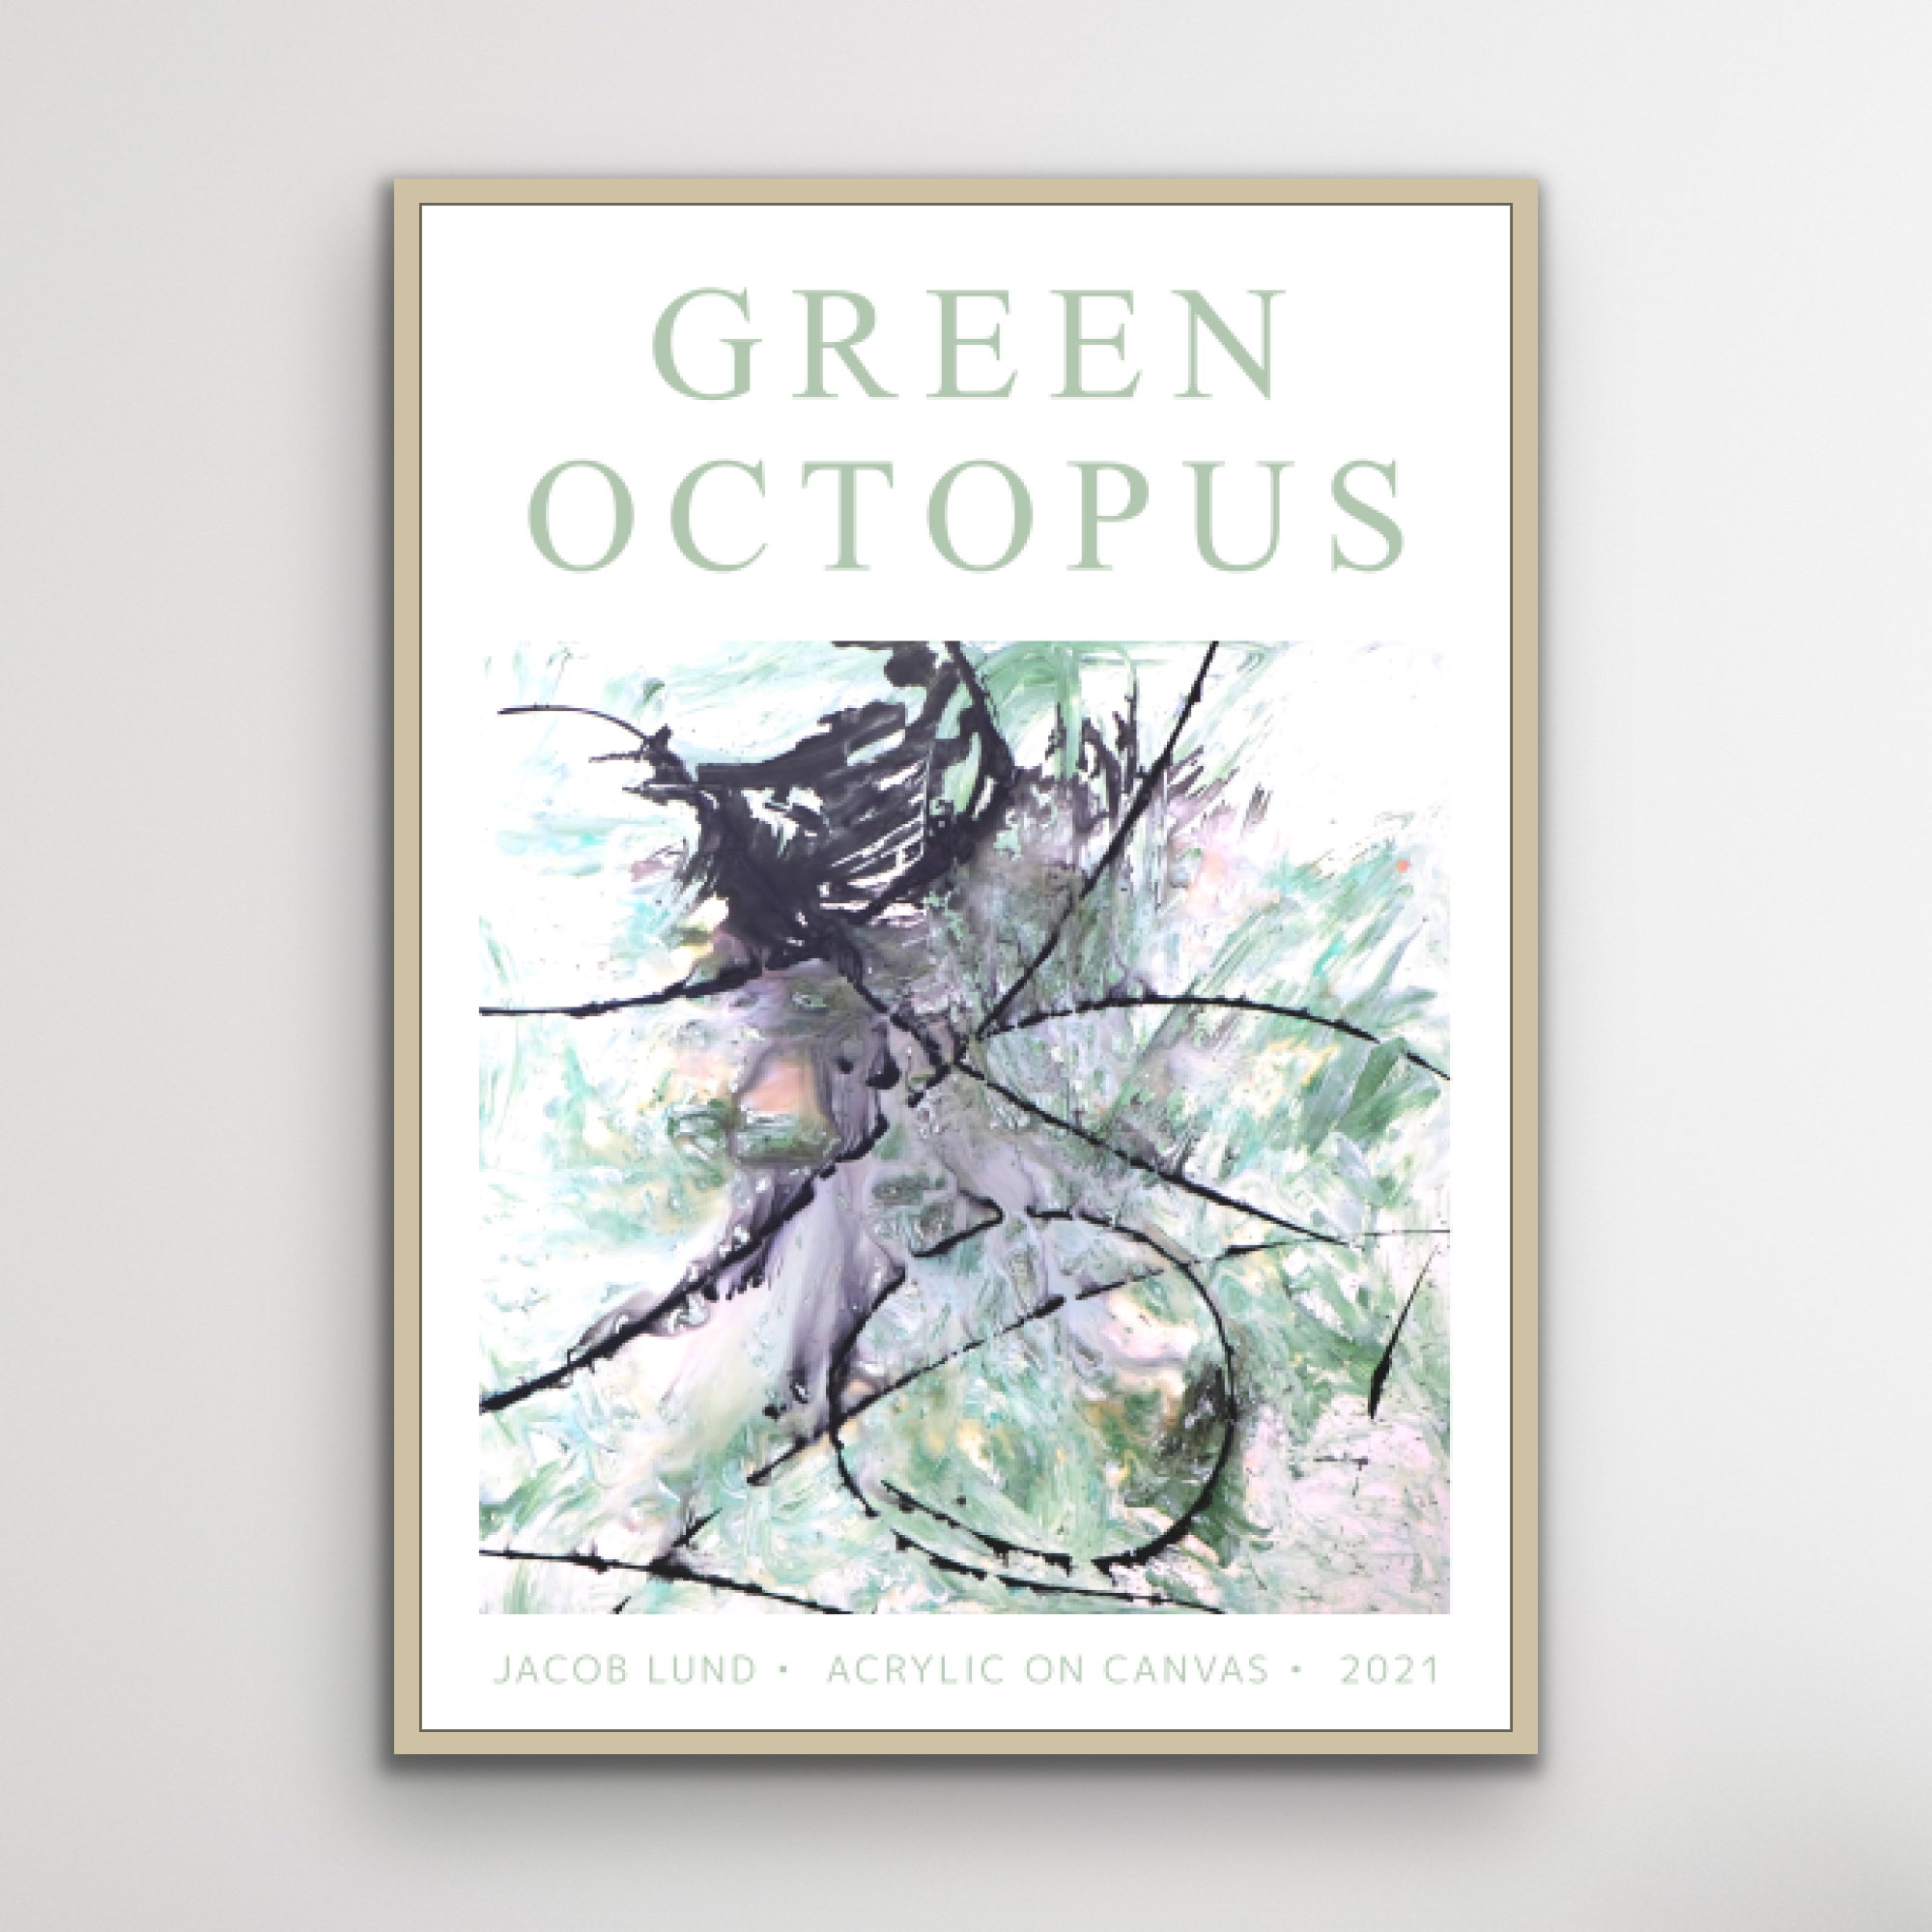 Plakat: "Green Octopus"